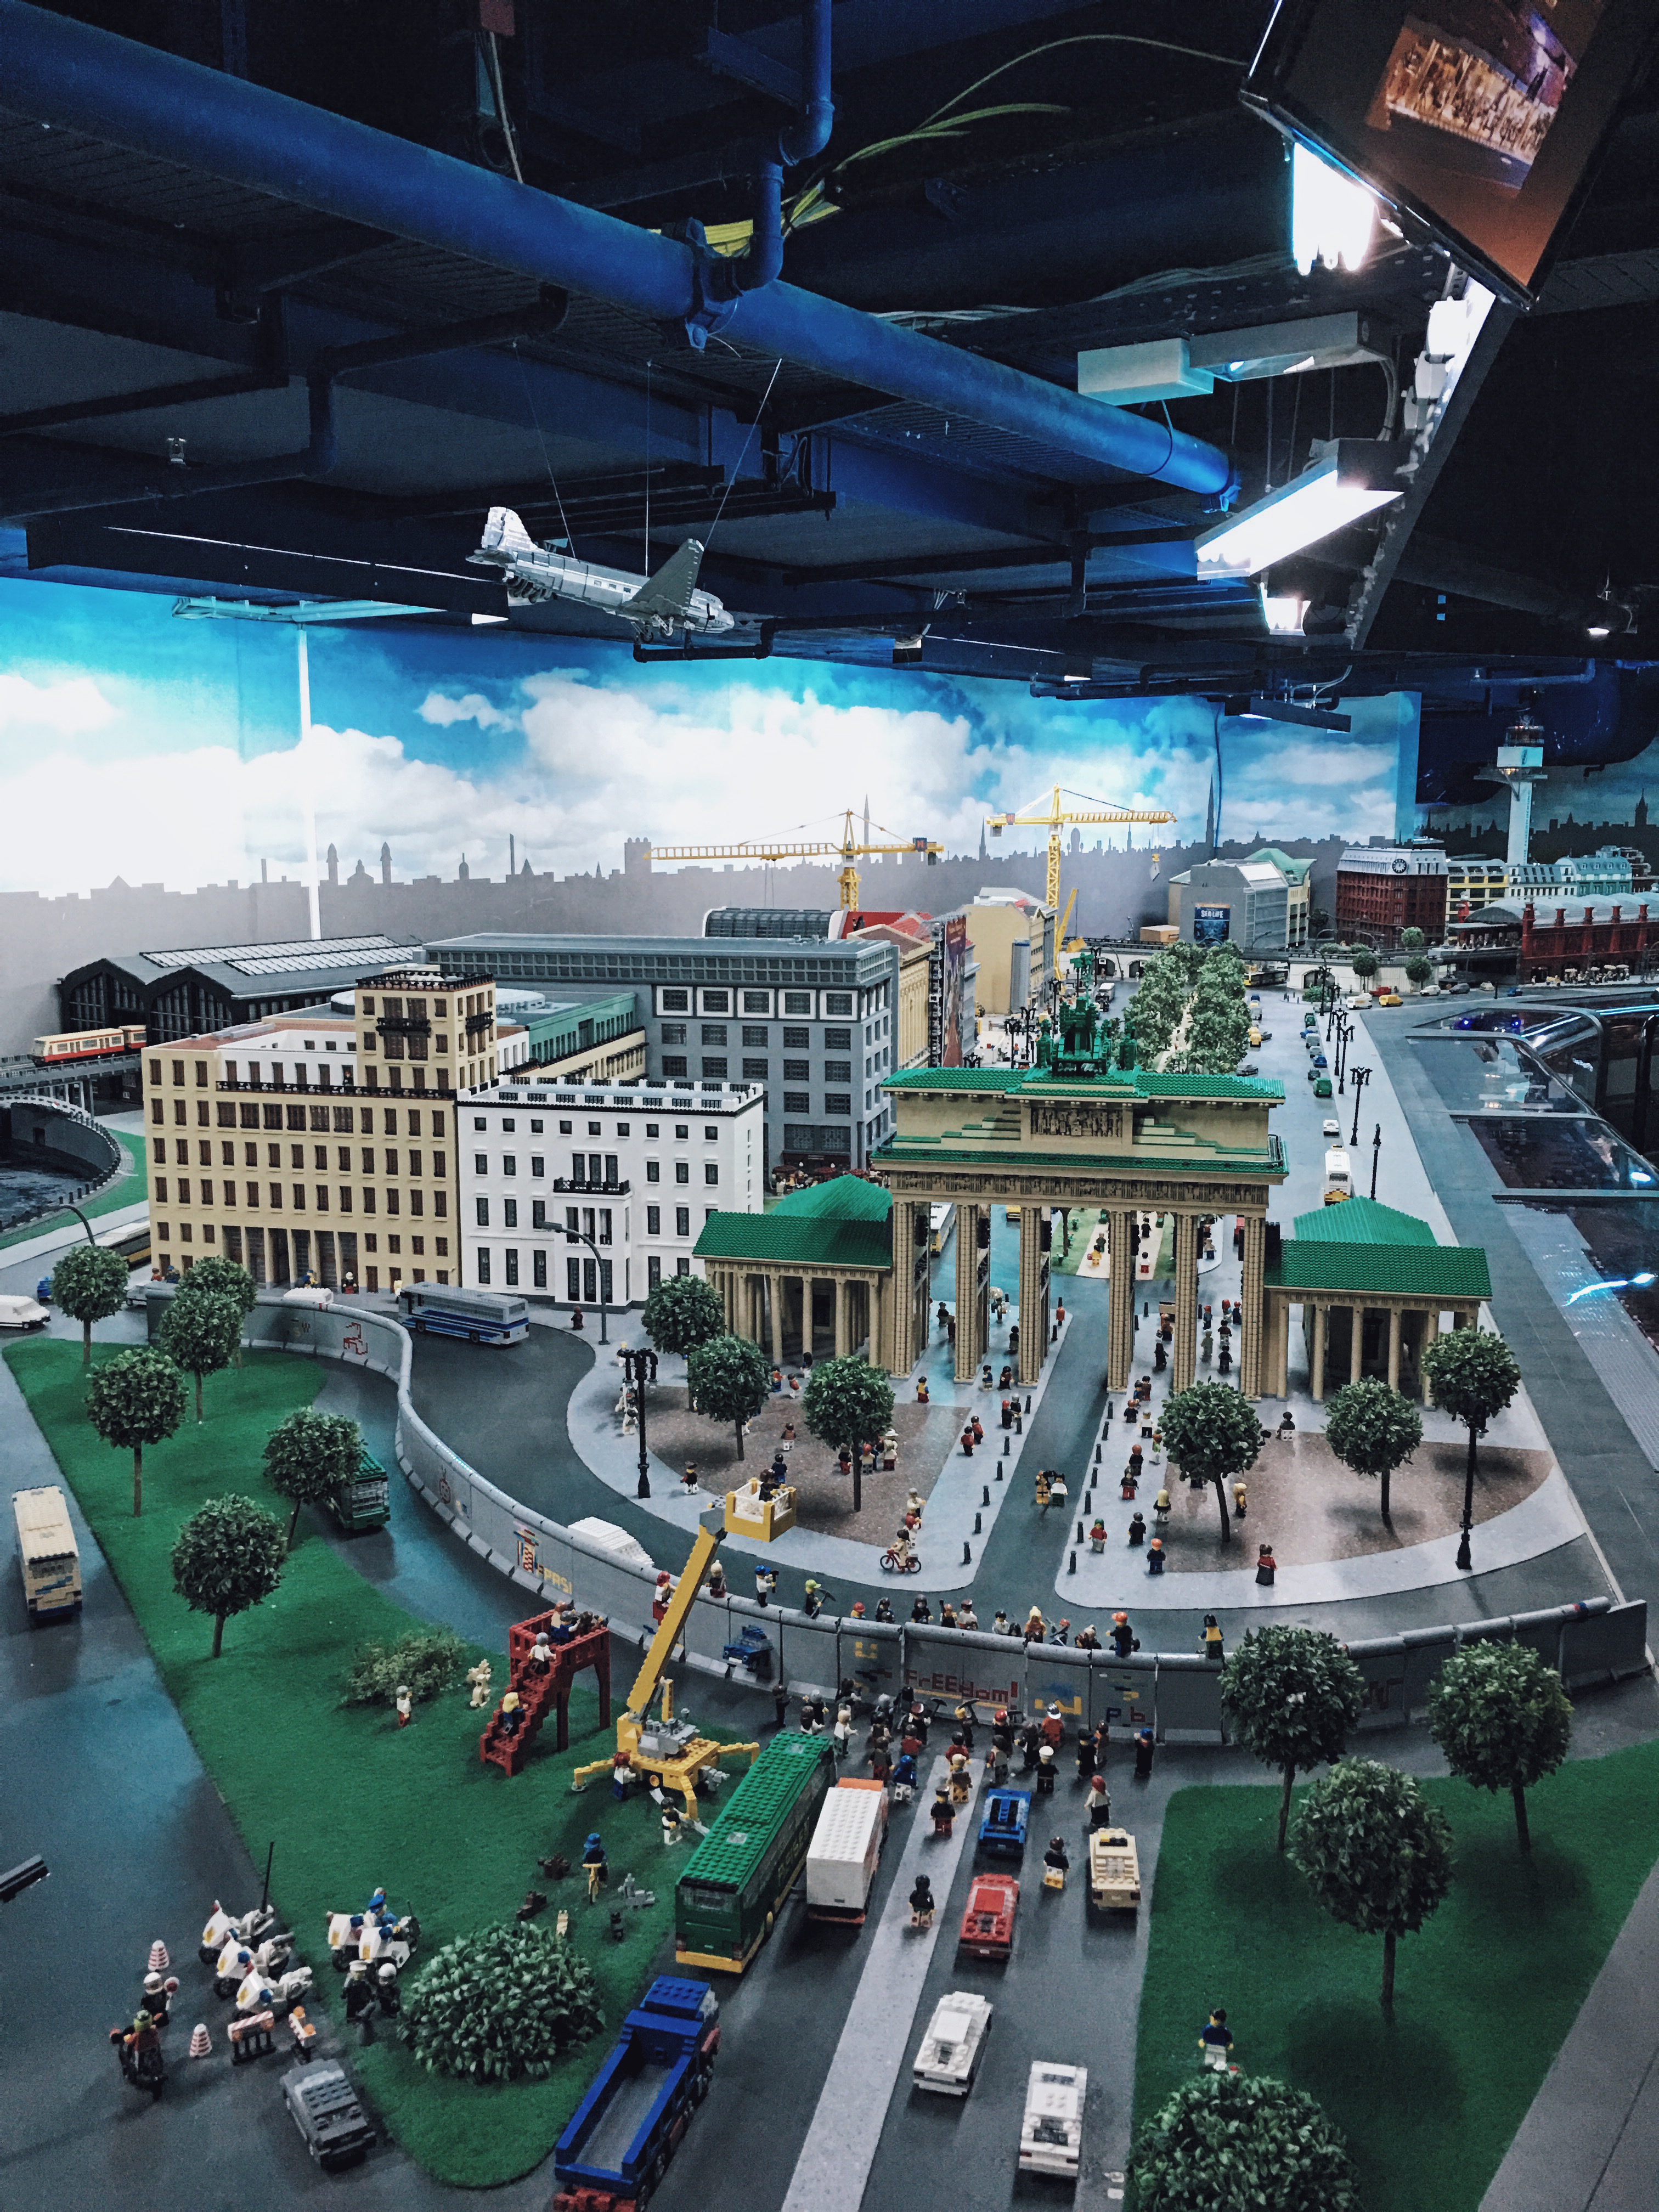 Legoland Discovery Center Berlin